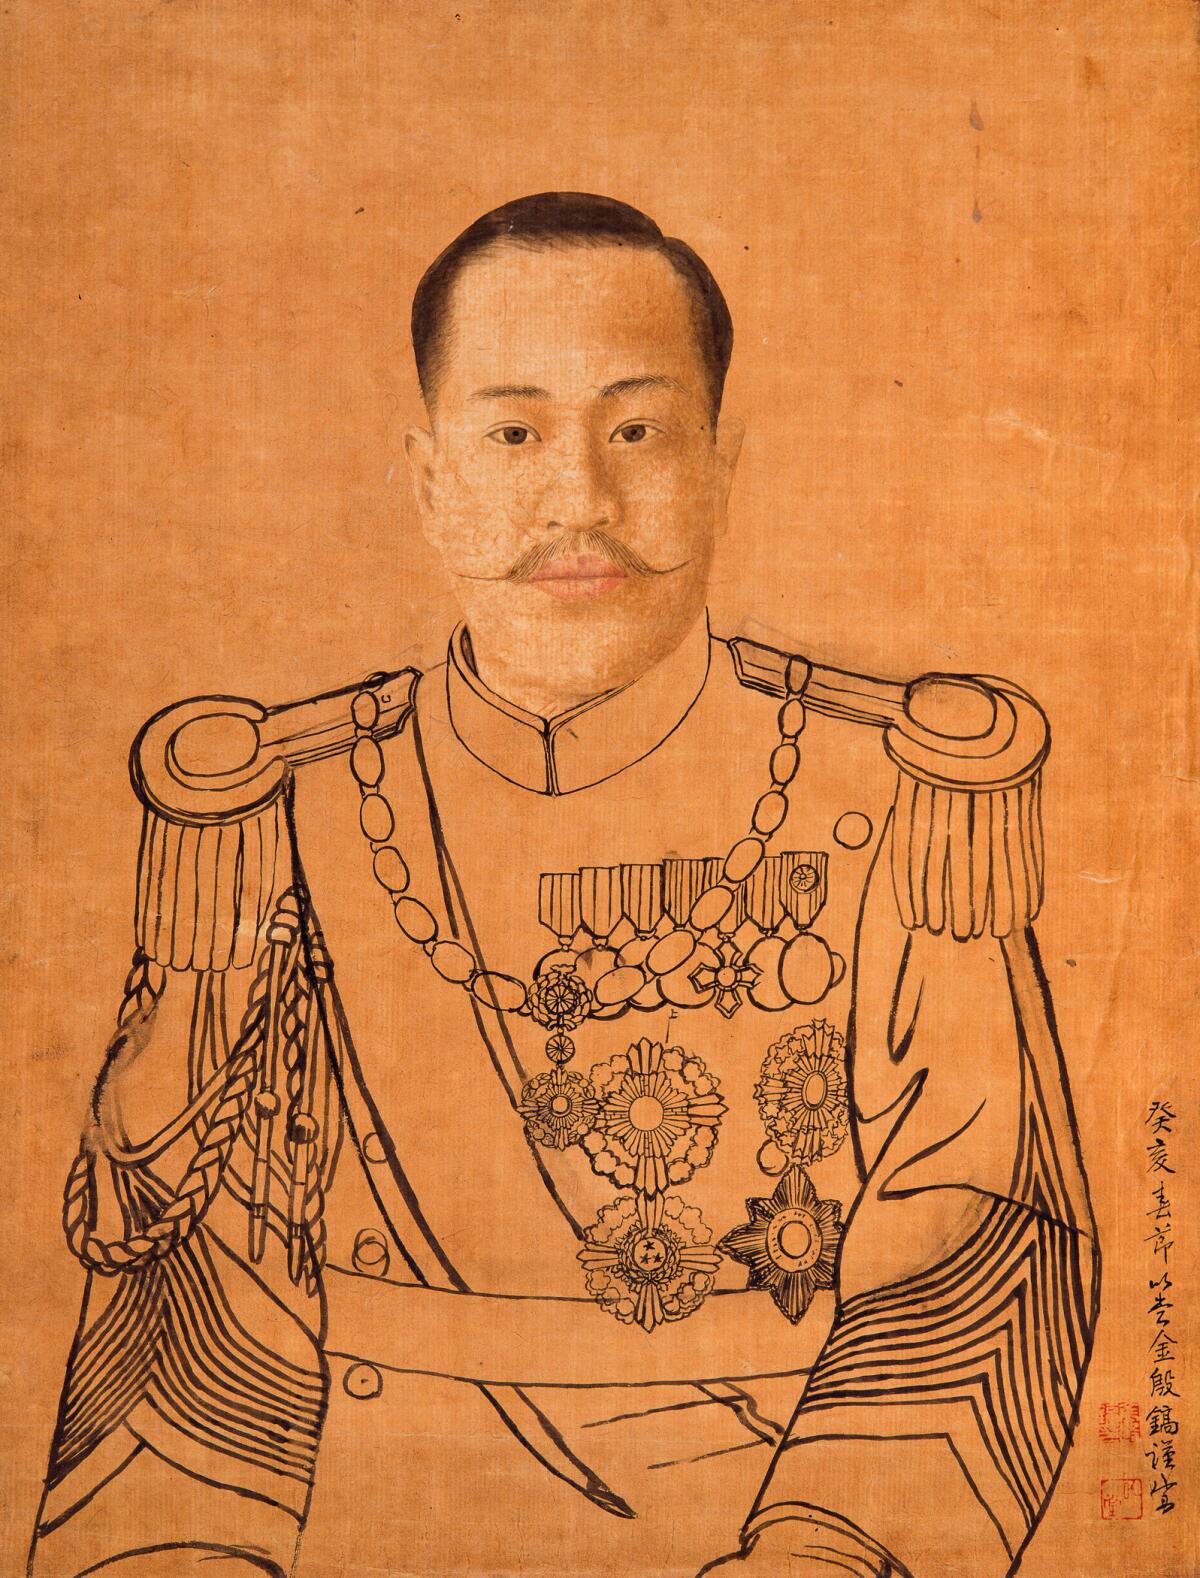 A ink-on-paper portrait of a Korean man in a medal-festooned military uniform